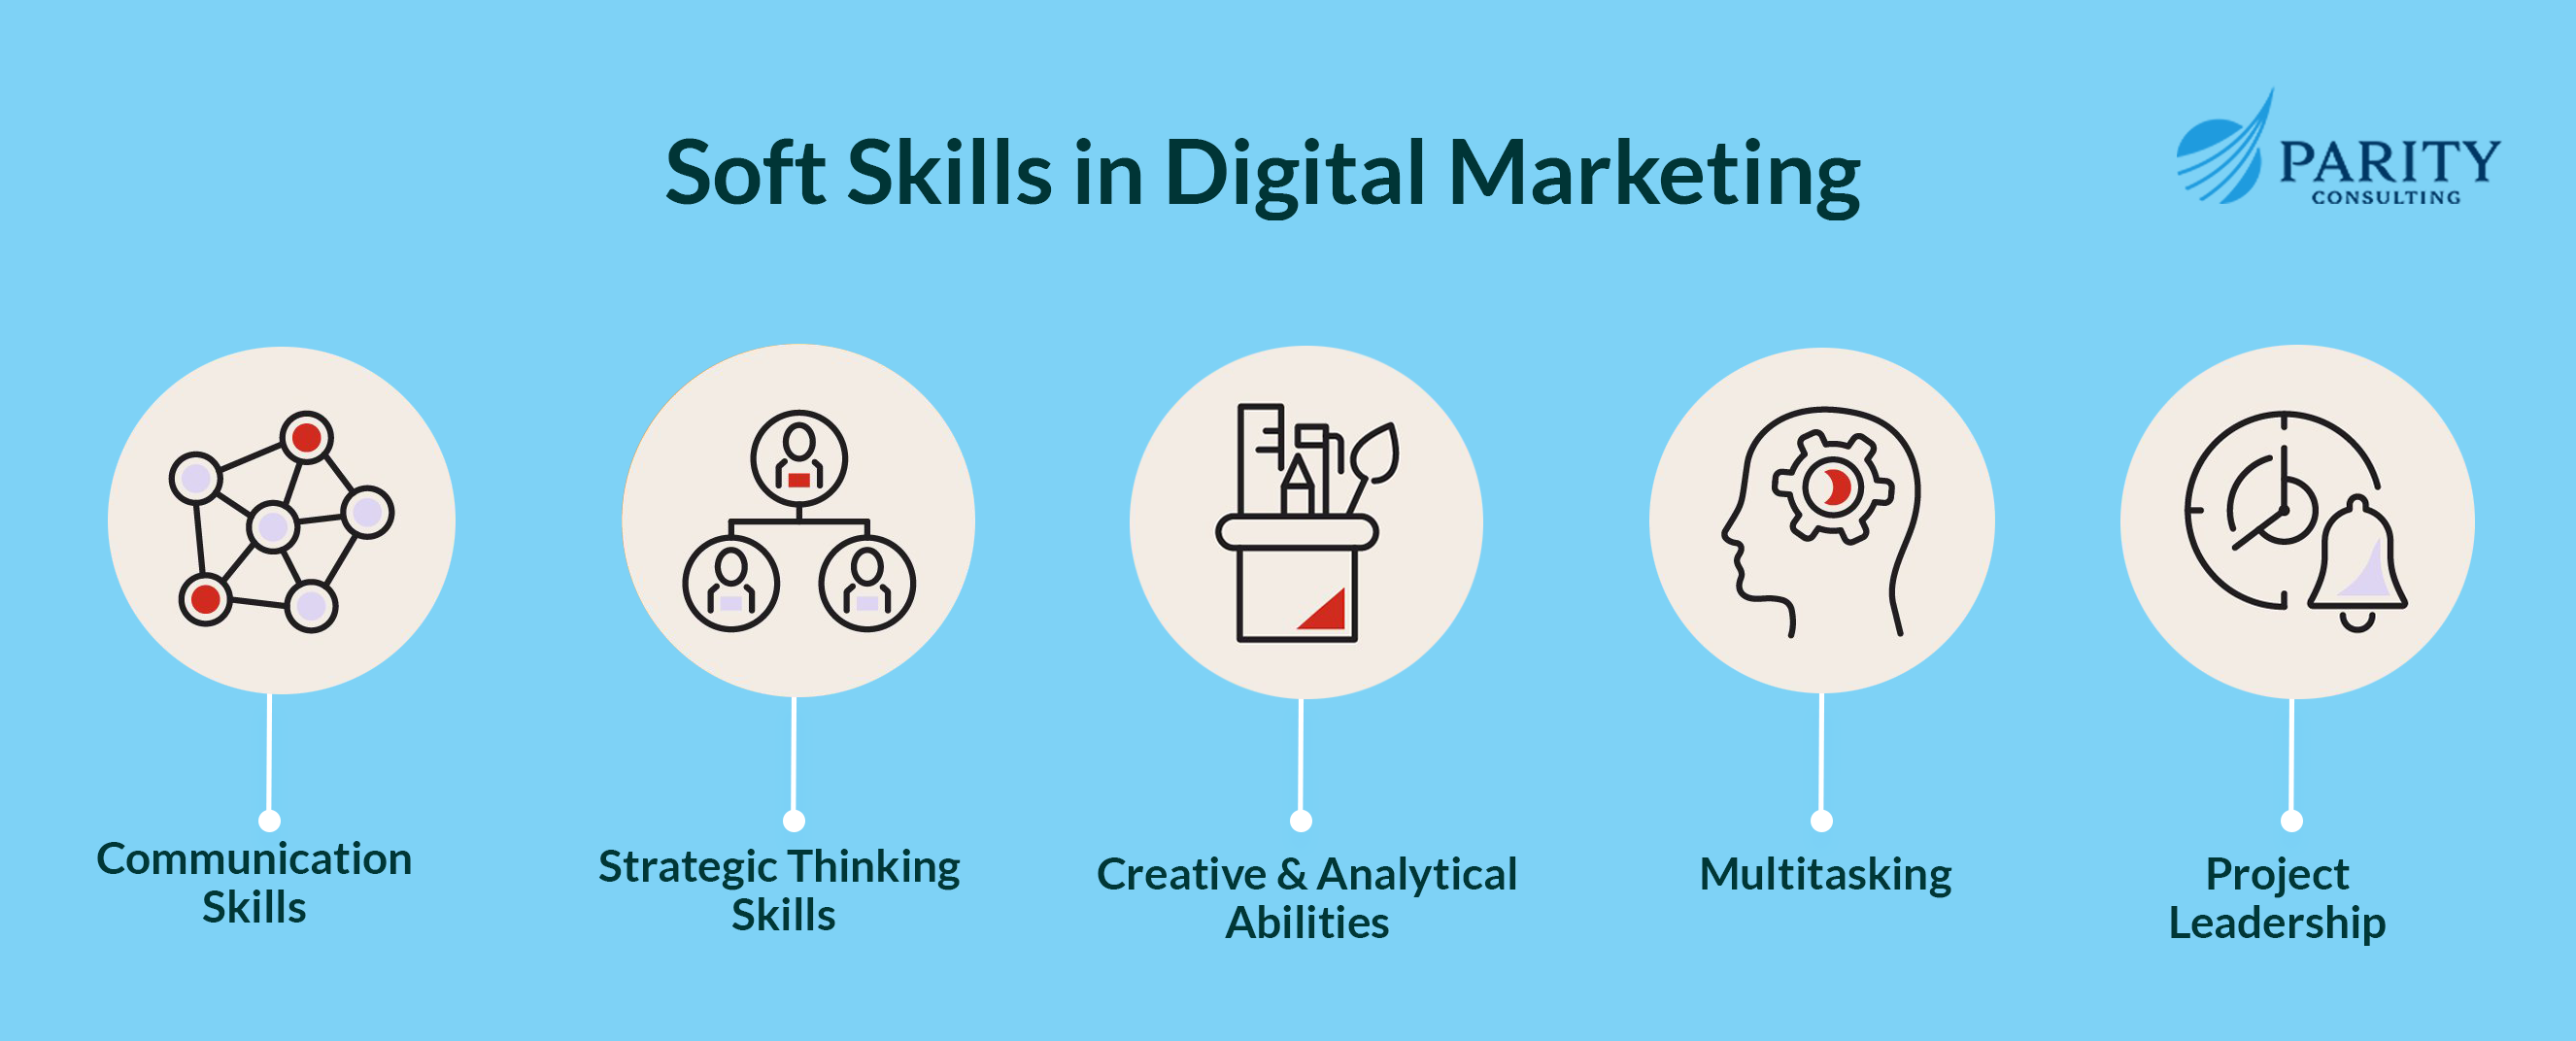 Soft Skills in Digital Marketing | Parity Consulting